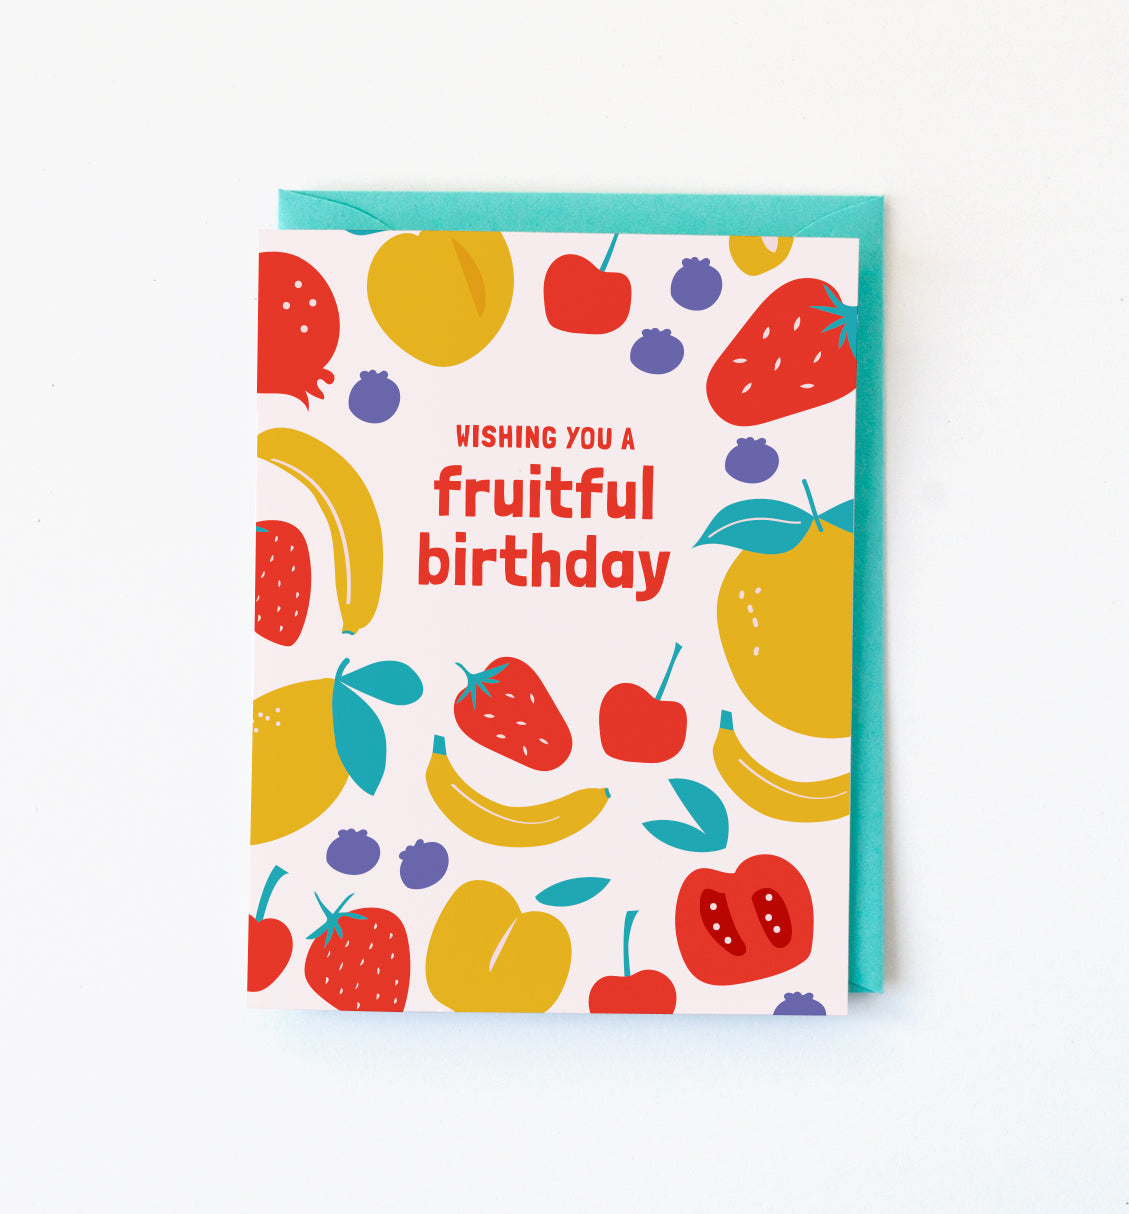 Fruitful Birthday wishes card